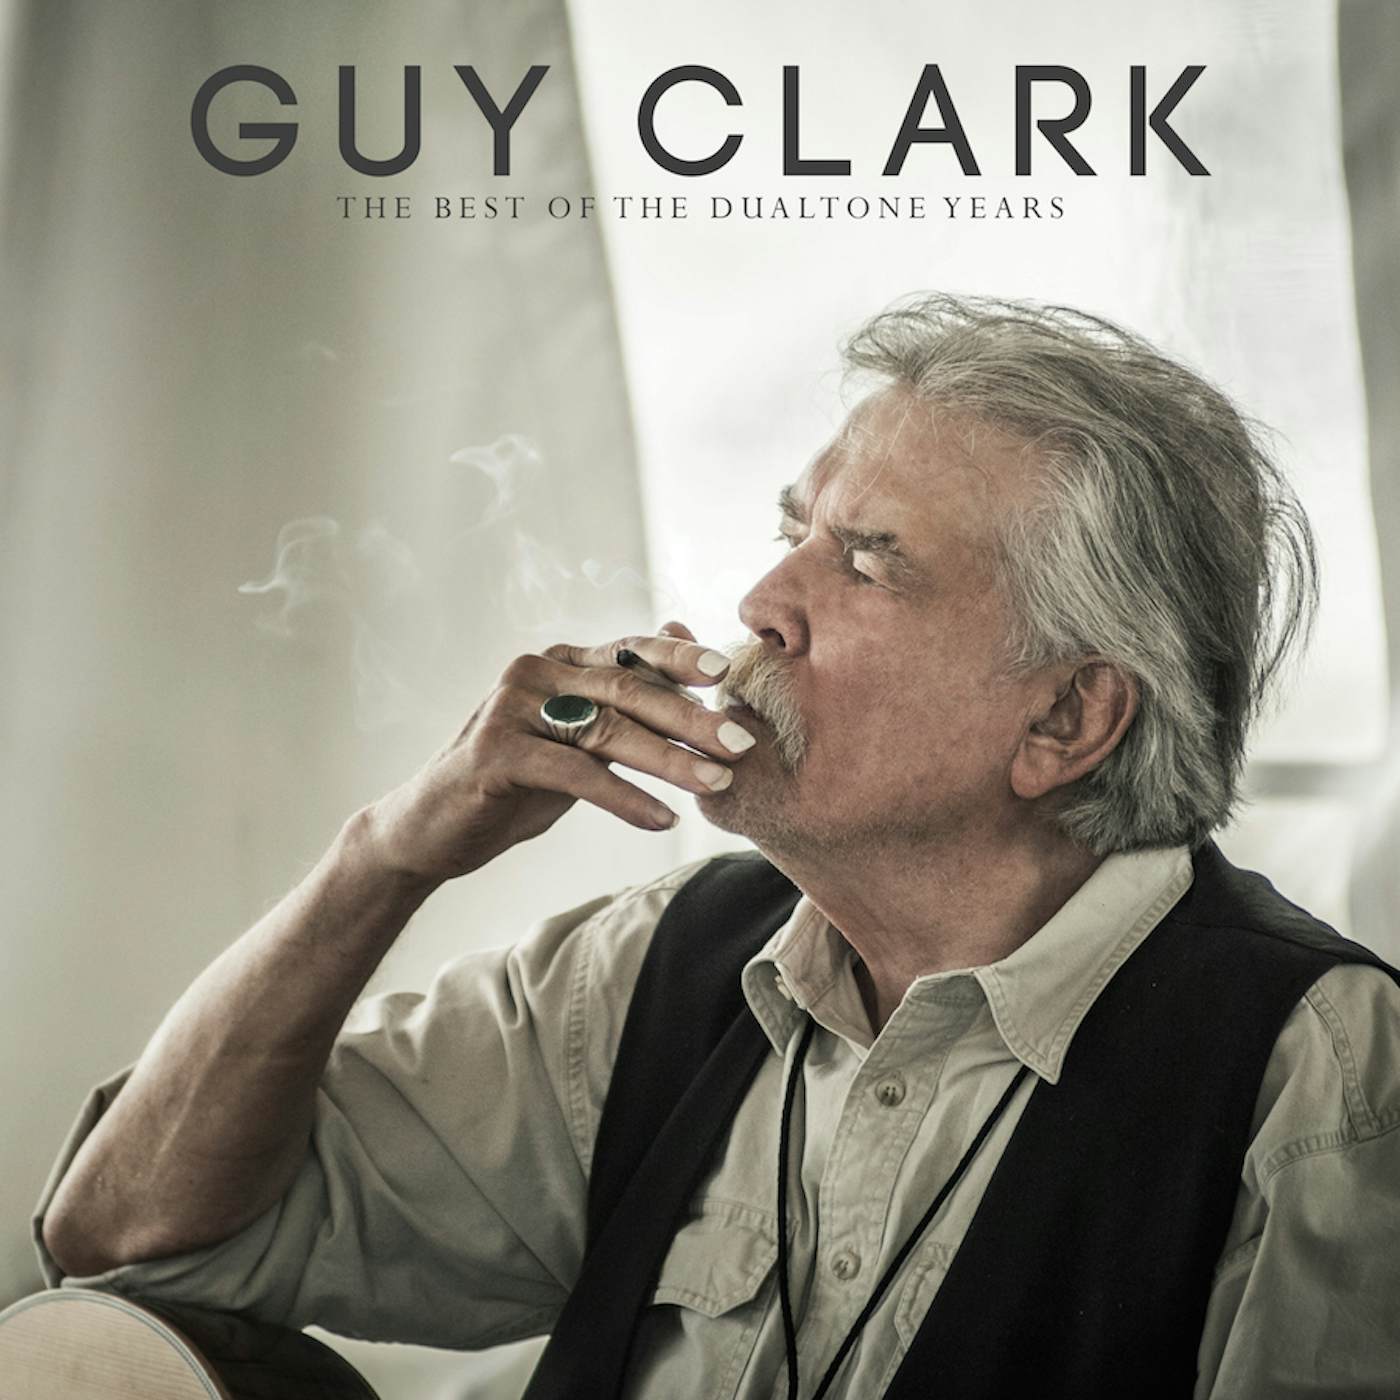 Guy Clark BEST OF THE DUALTONE YEARS CD